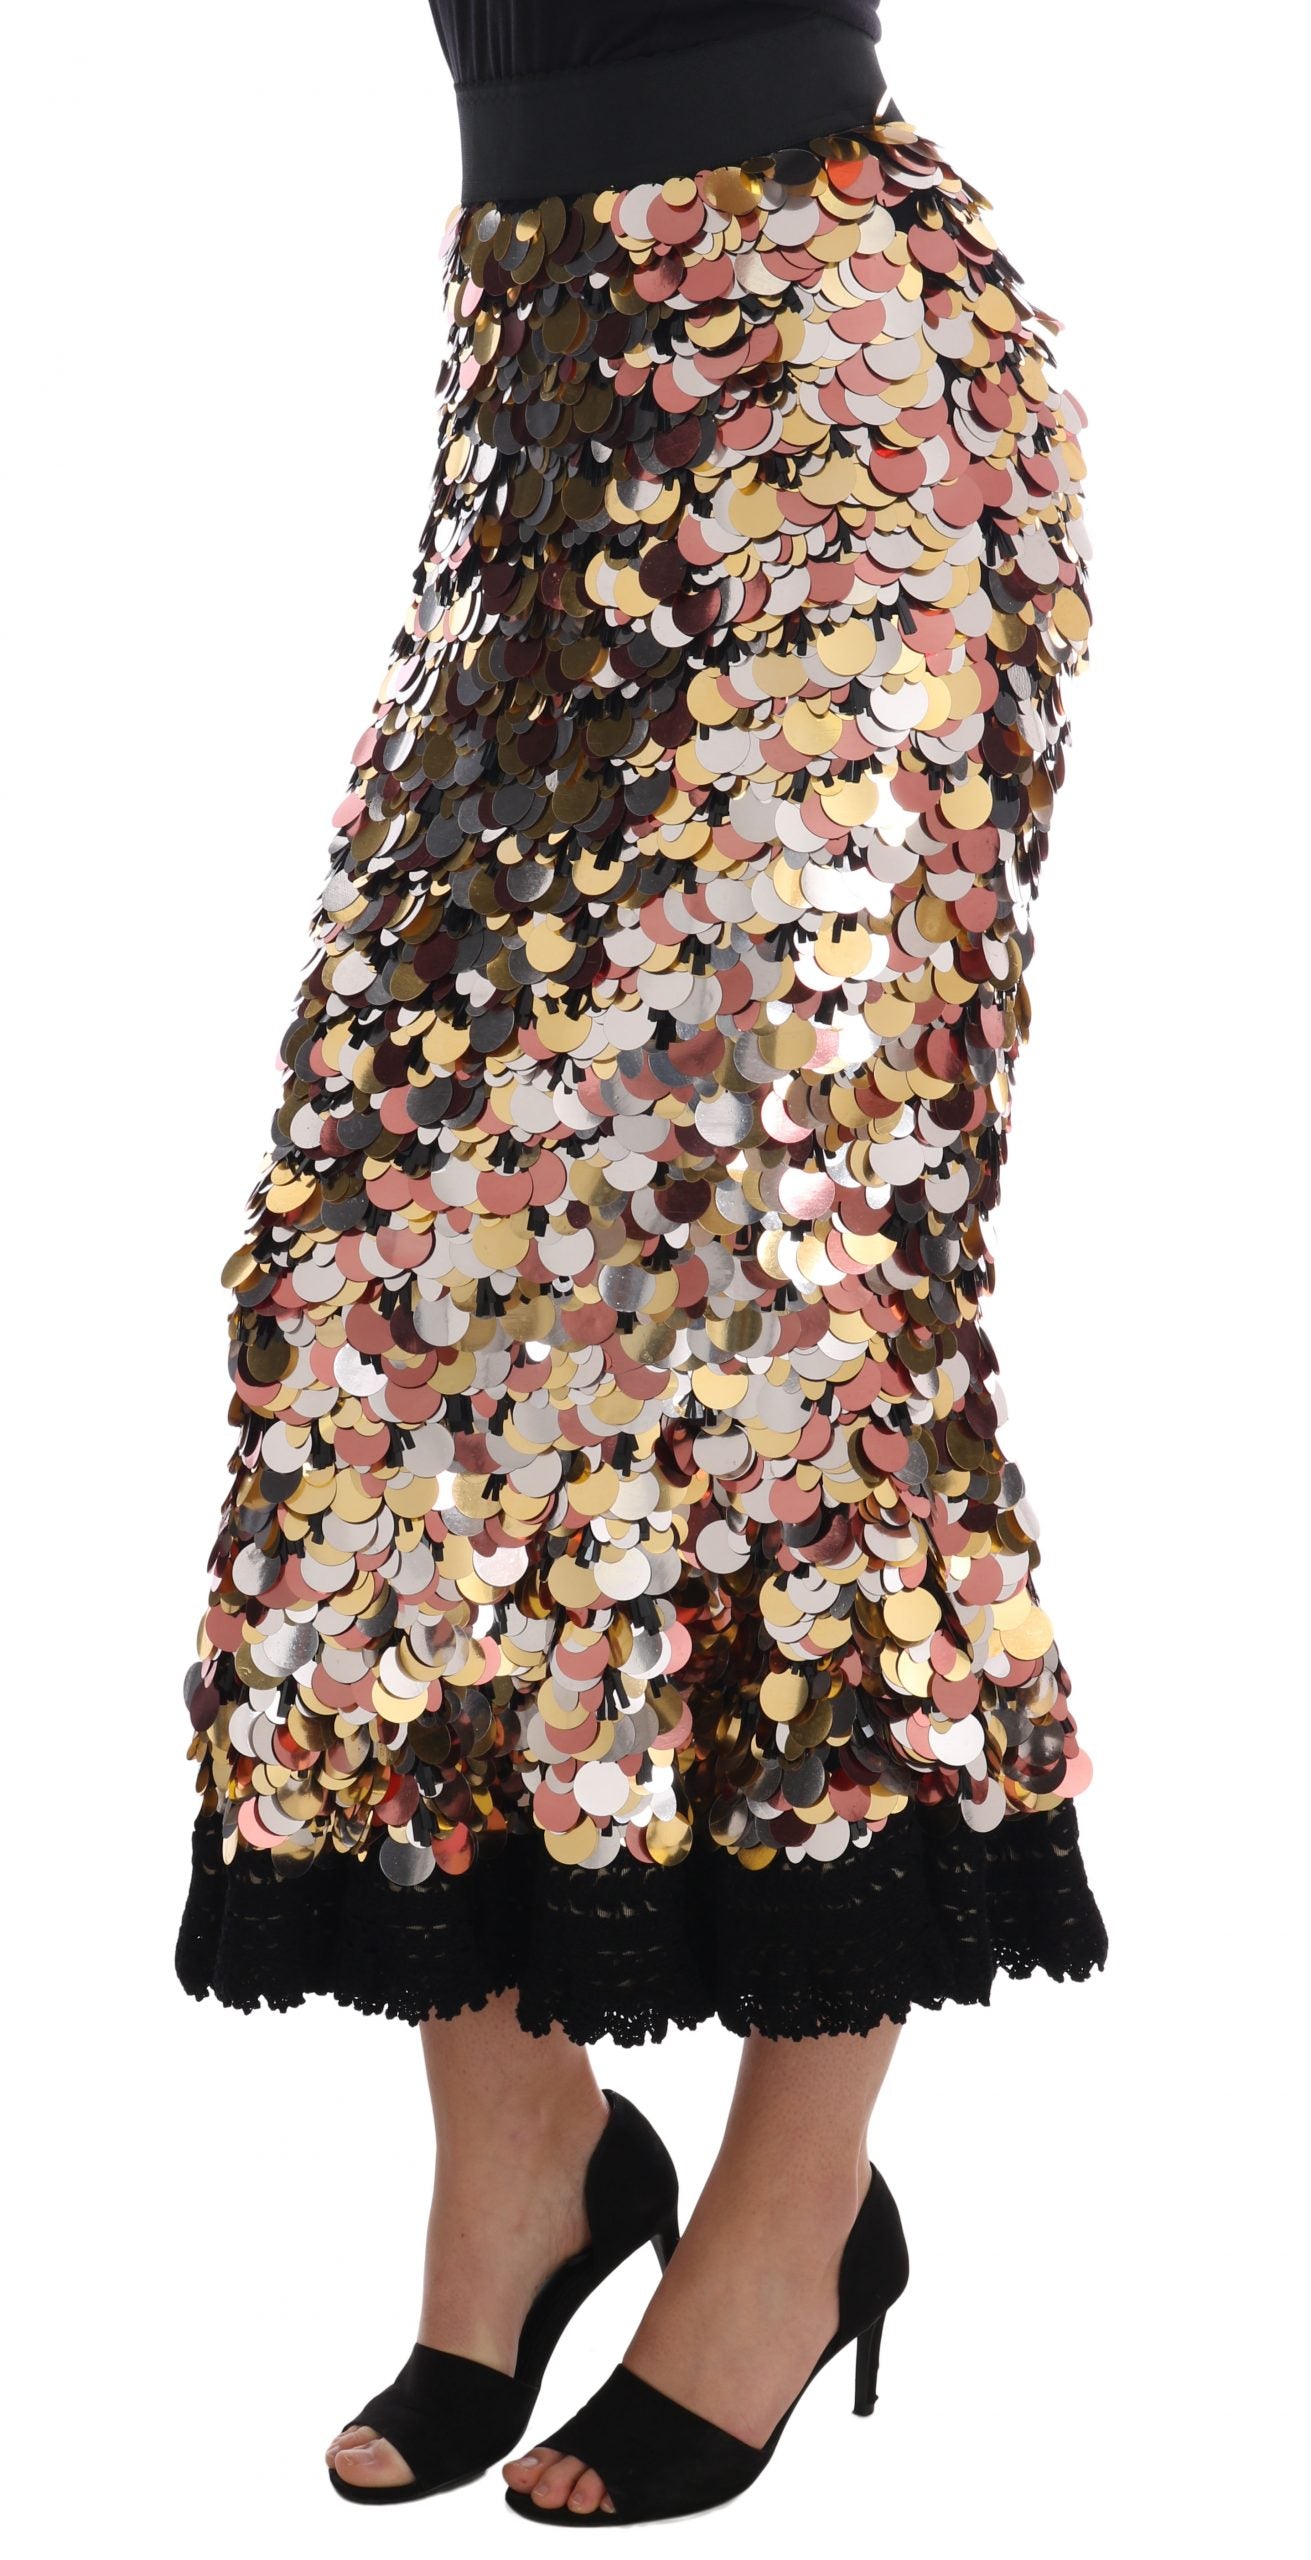 Sequin Embellished High-Waist Pencil Skirt